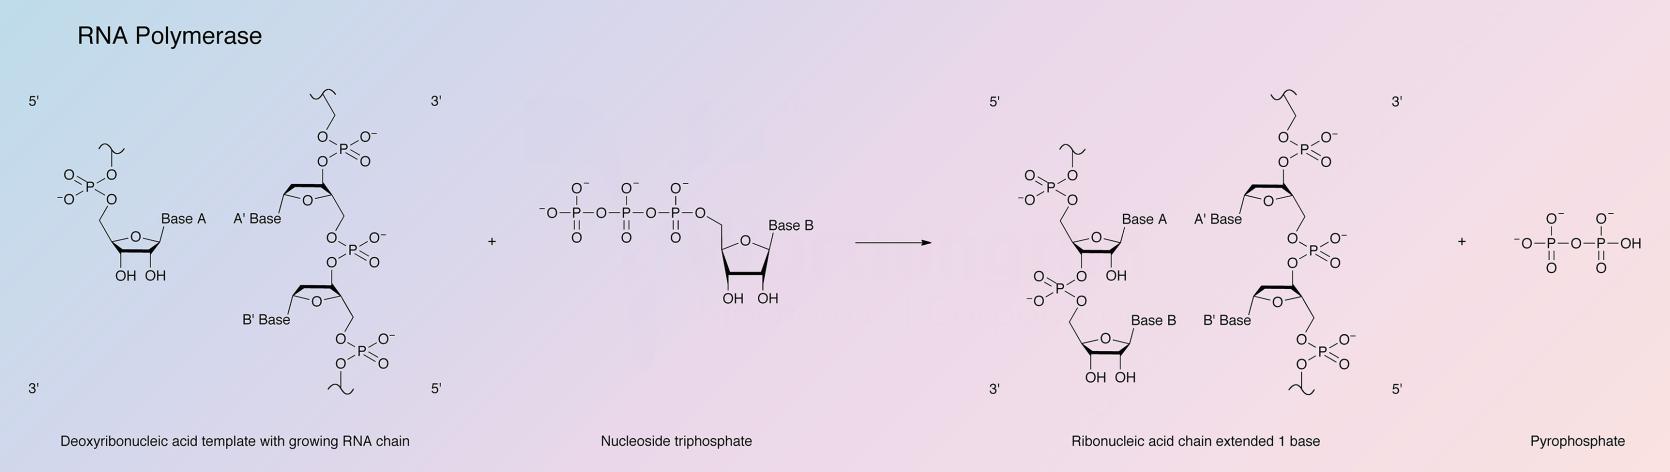 RNA Polymerase Enzymatic Reaction